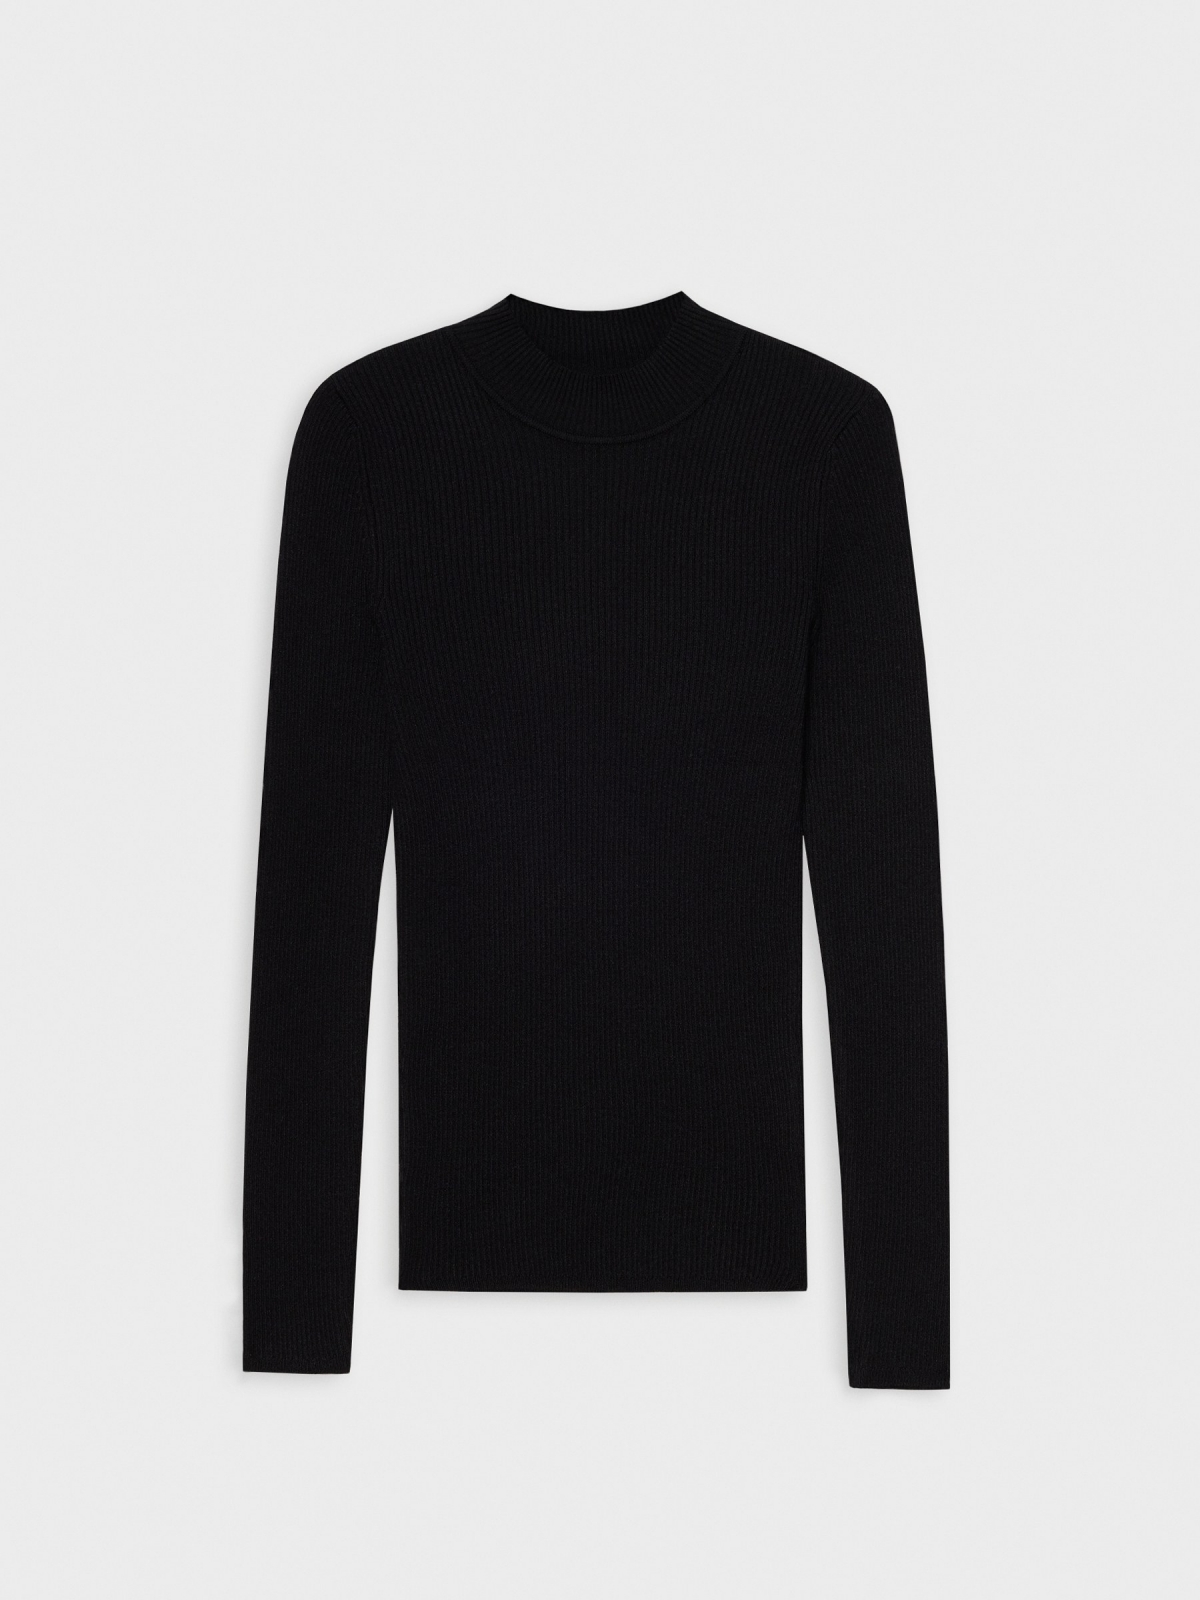  Black sweater with turtleneck black